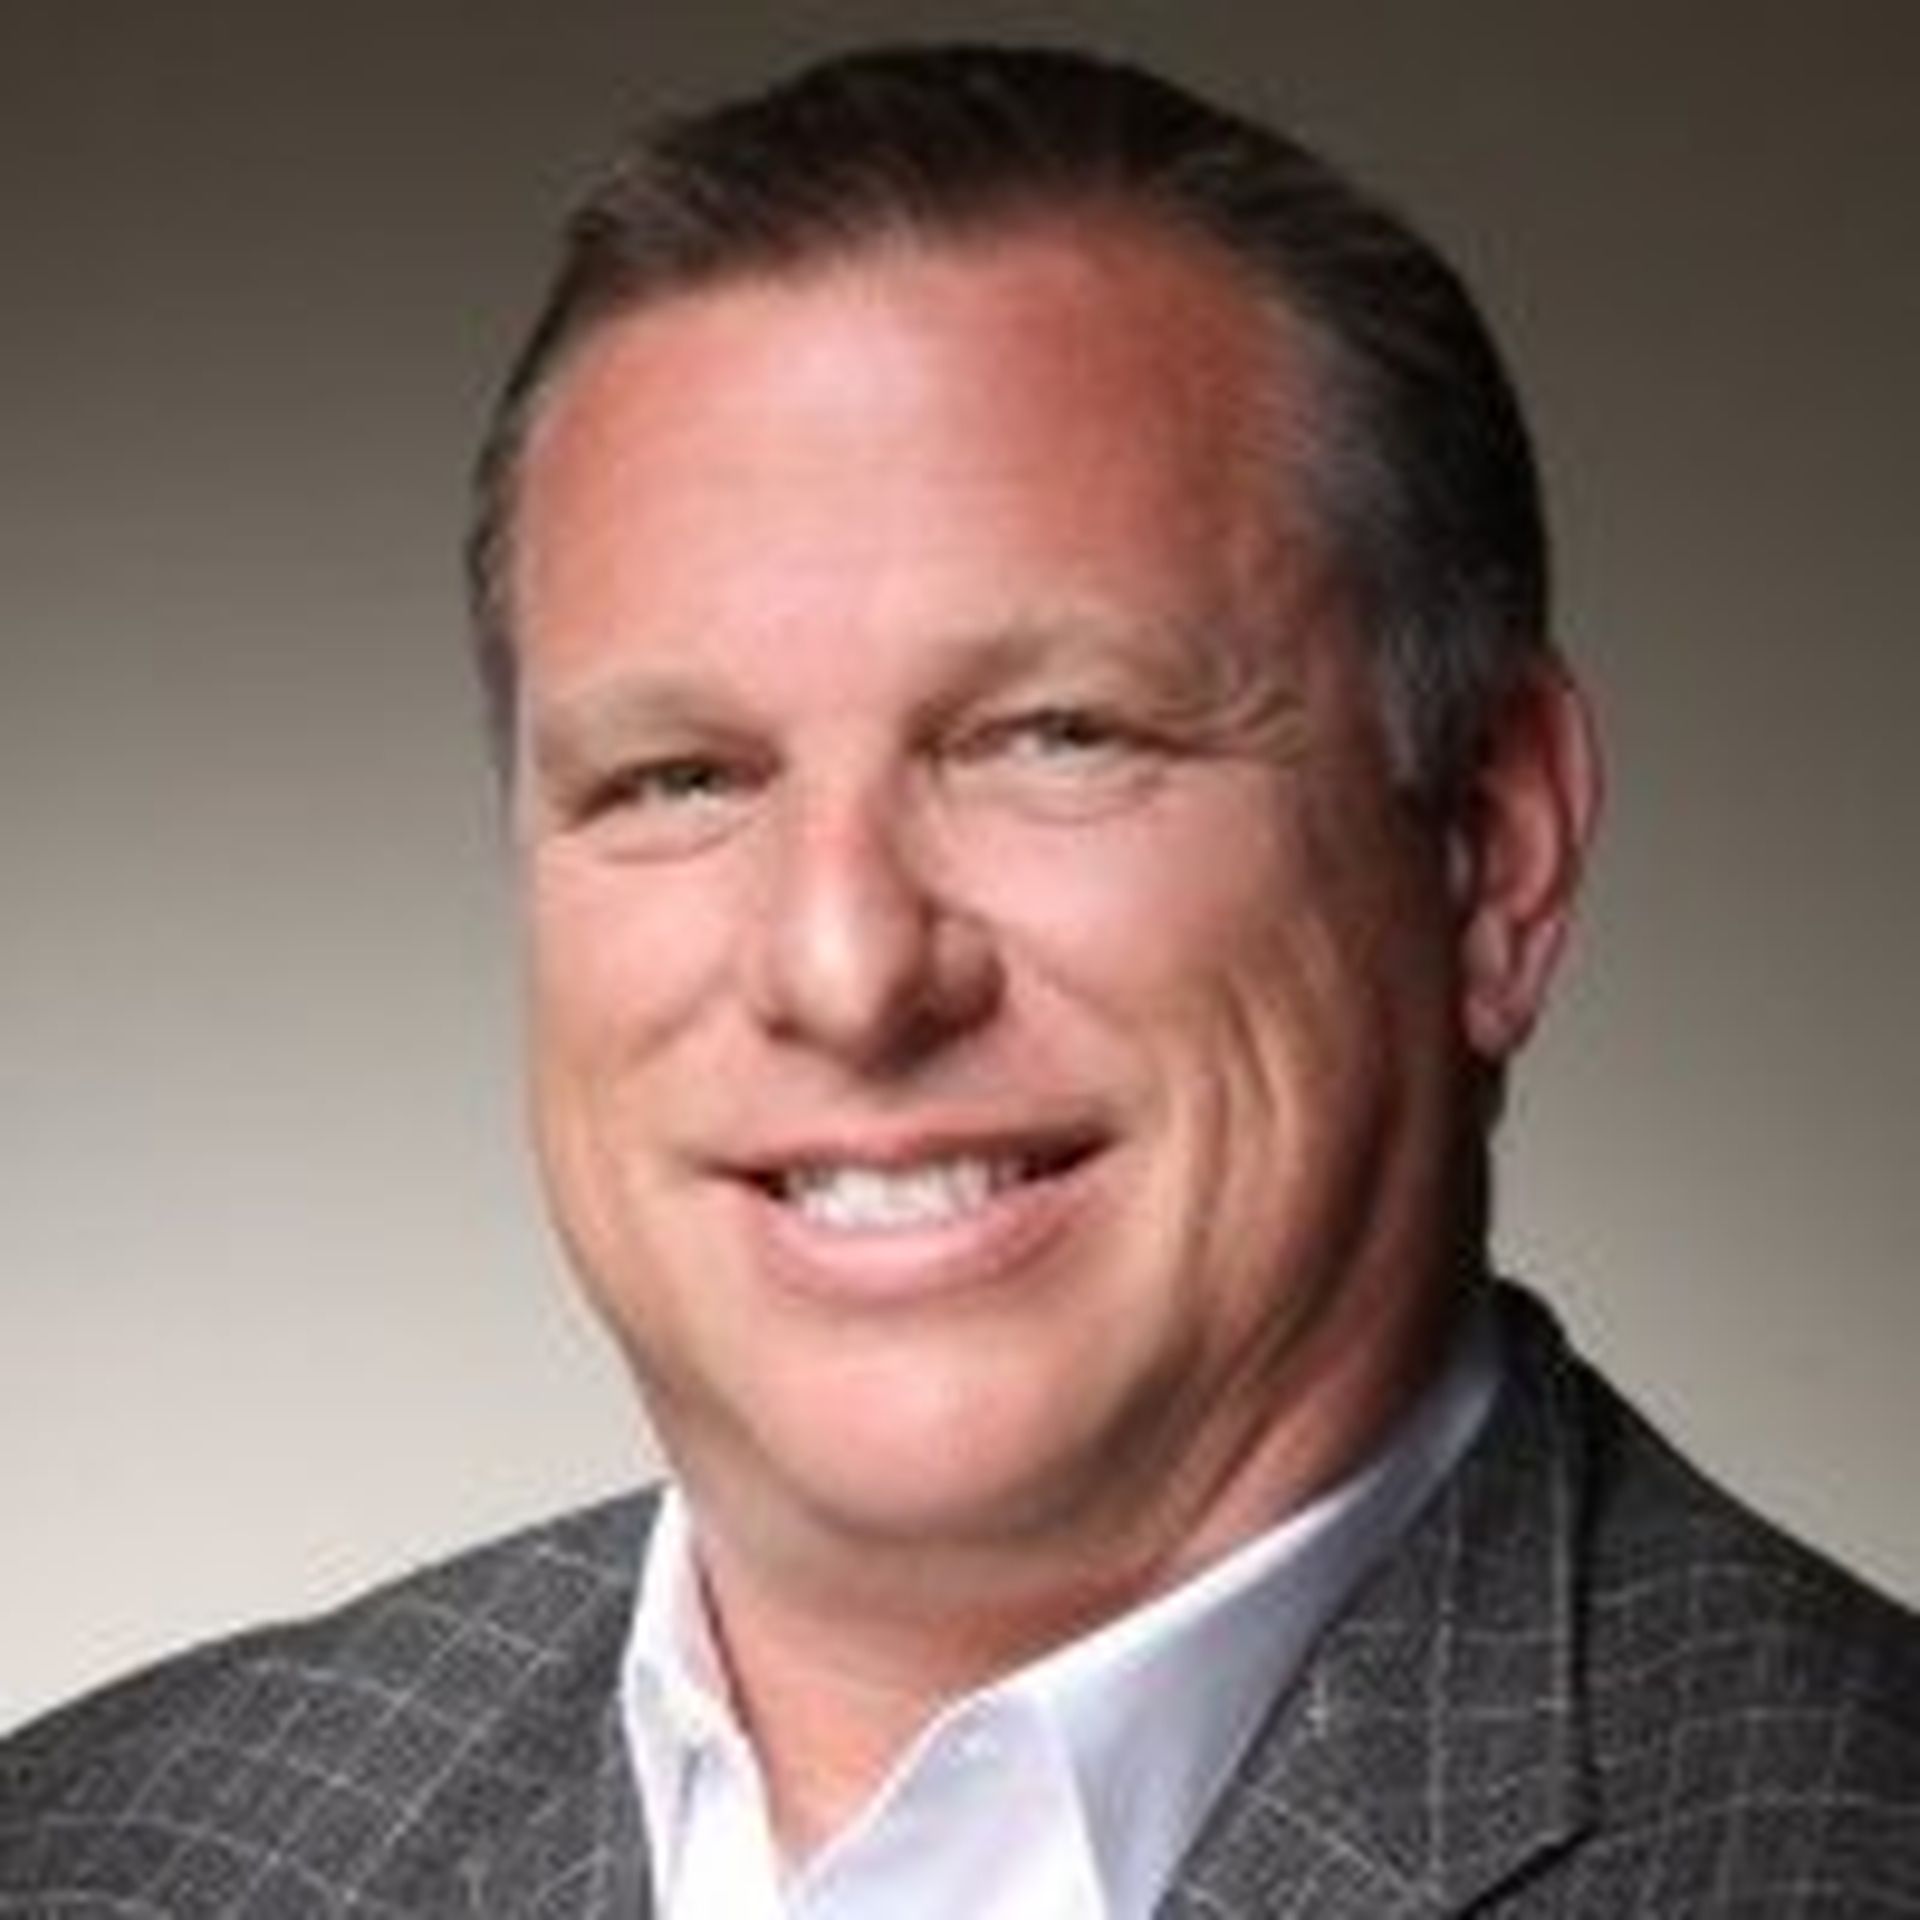 Cogent Growth Partners CEO Rick Murphy